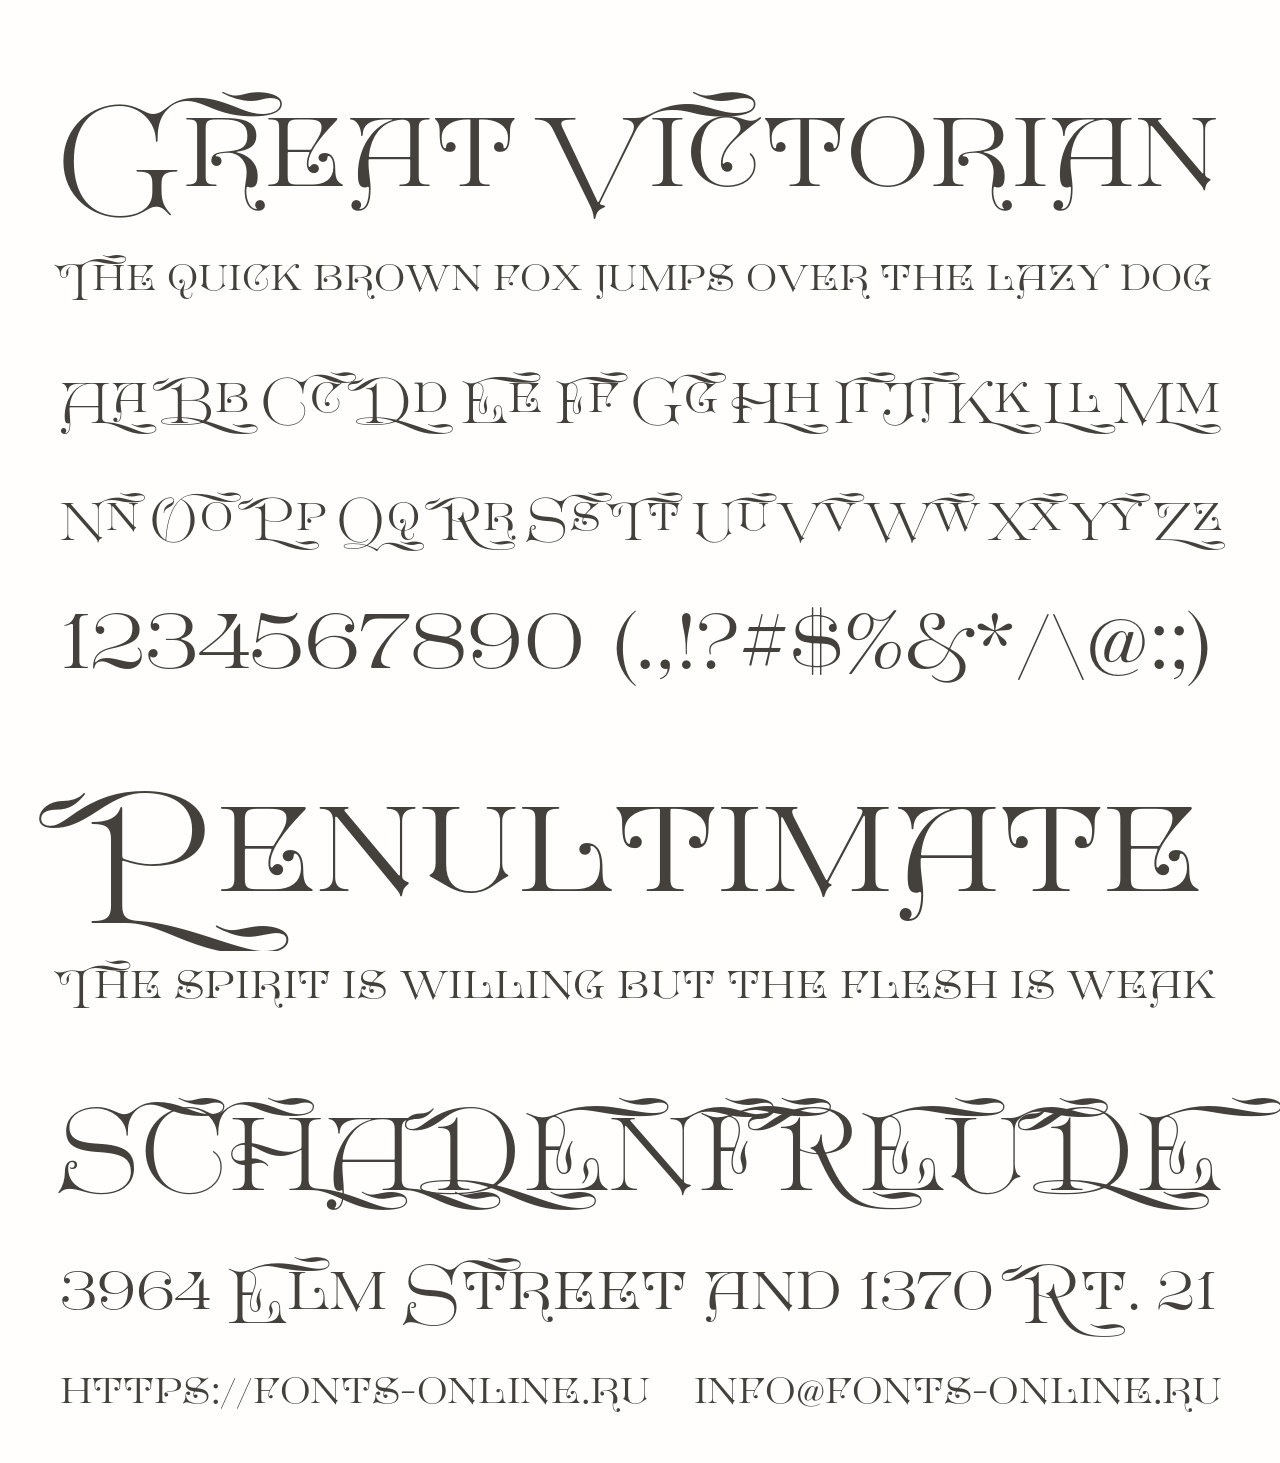 Шрифт Great Victorian